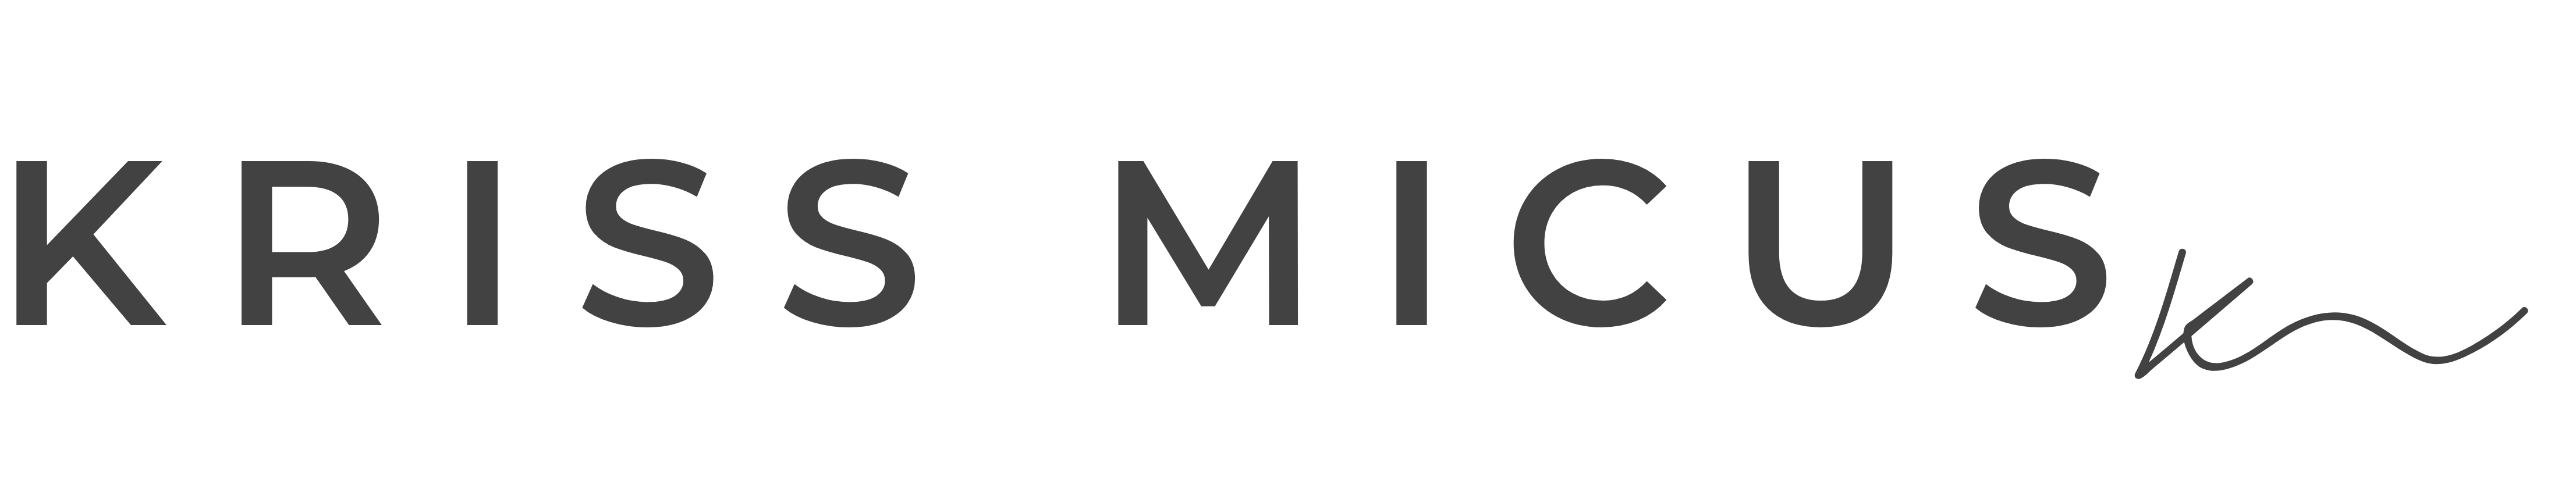 KRISS MICUS Brand Logo